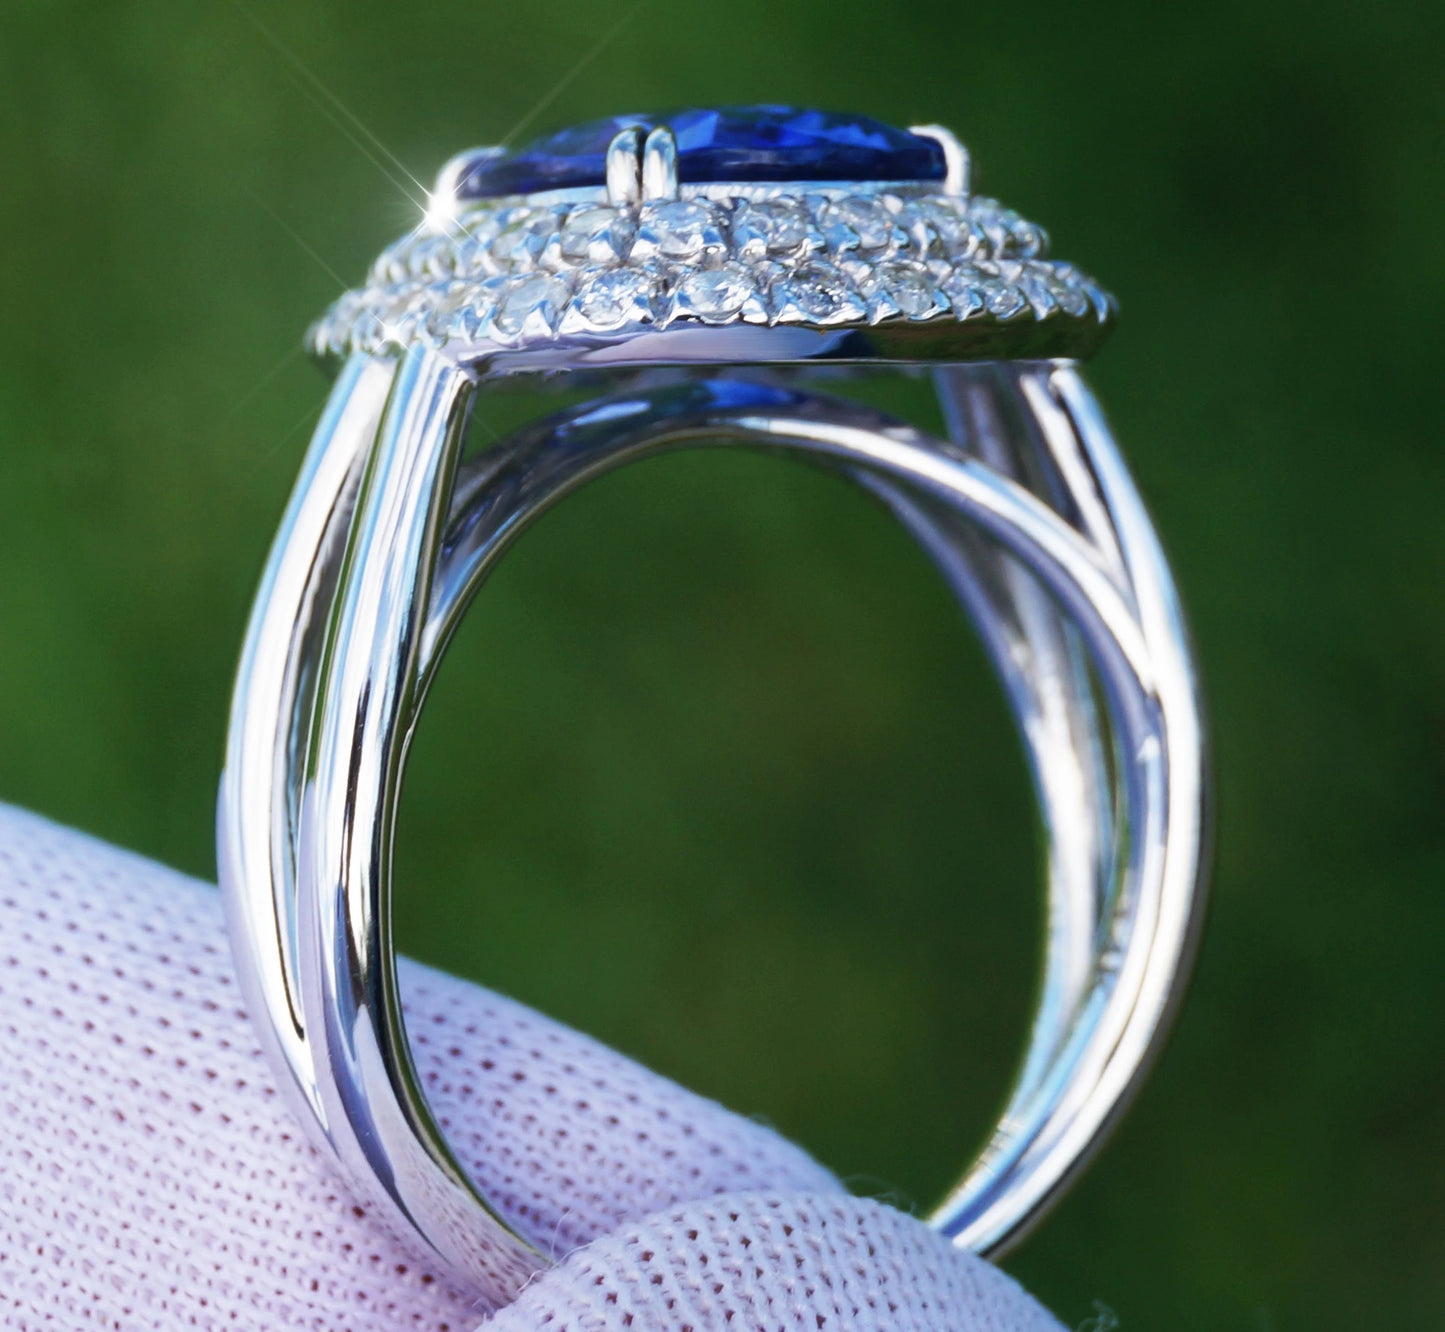 gold 14k Sapphire & diamond ring 4.46ctw gia certified madagascar cushion blue